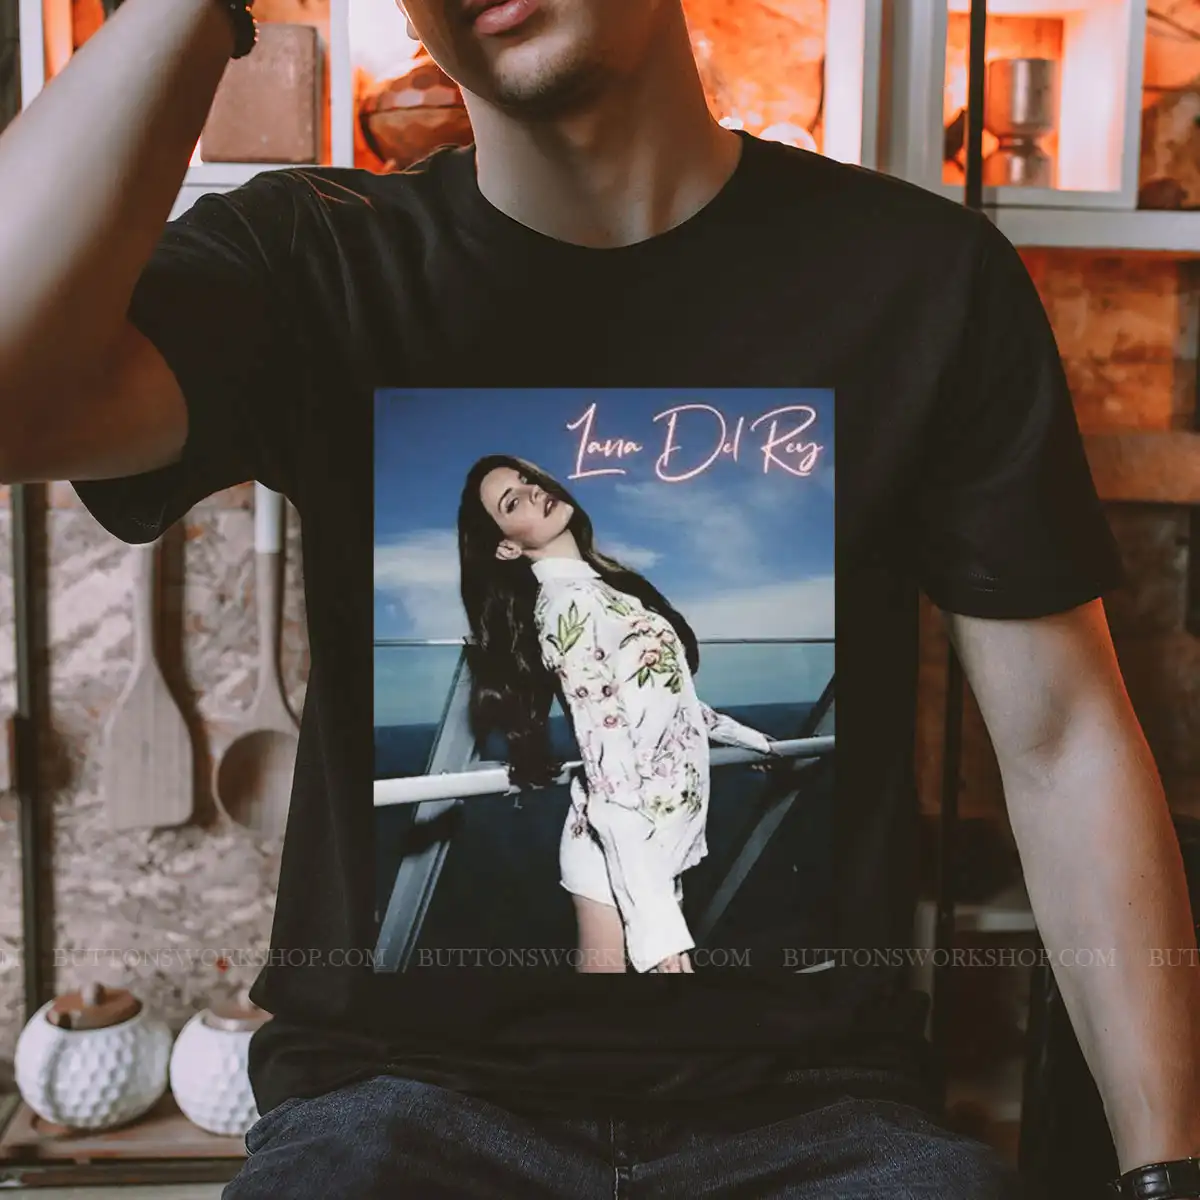 Lana Del Rey Shirt Urban Outfitters Unisex Tshirt